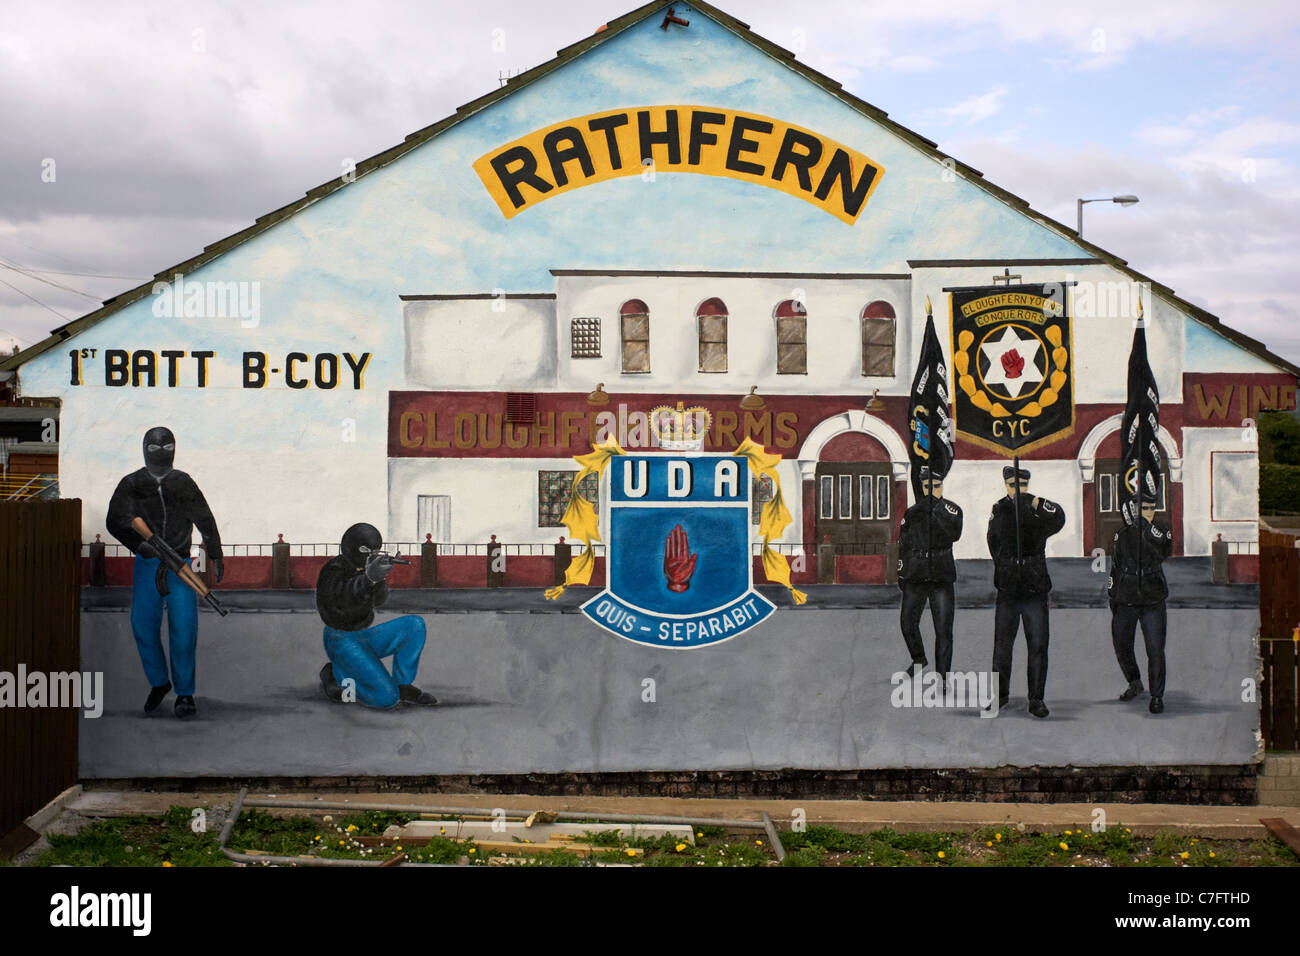 rathfern uda ulster defence association loyalist wall mural painting newtownabbey northern ireland Stock Photo